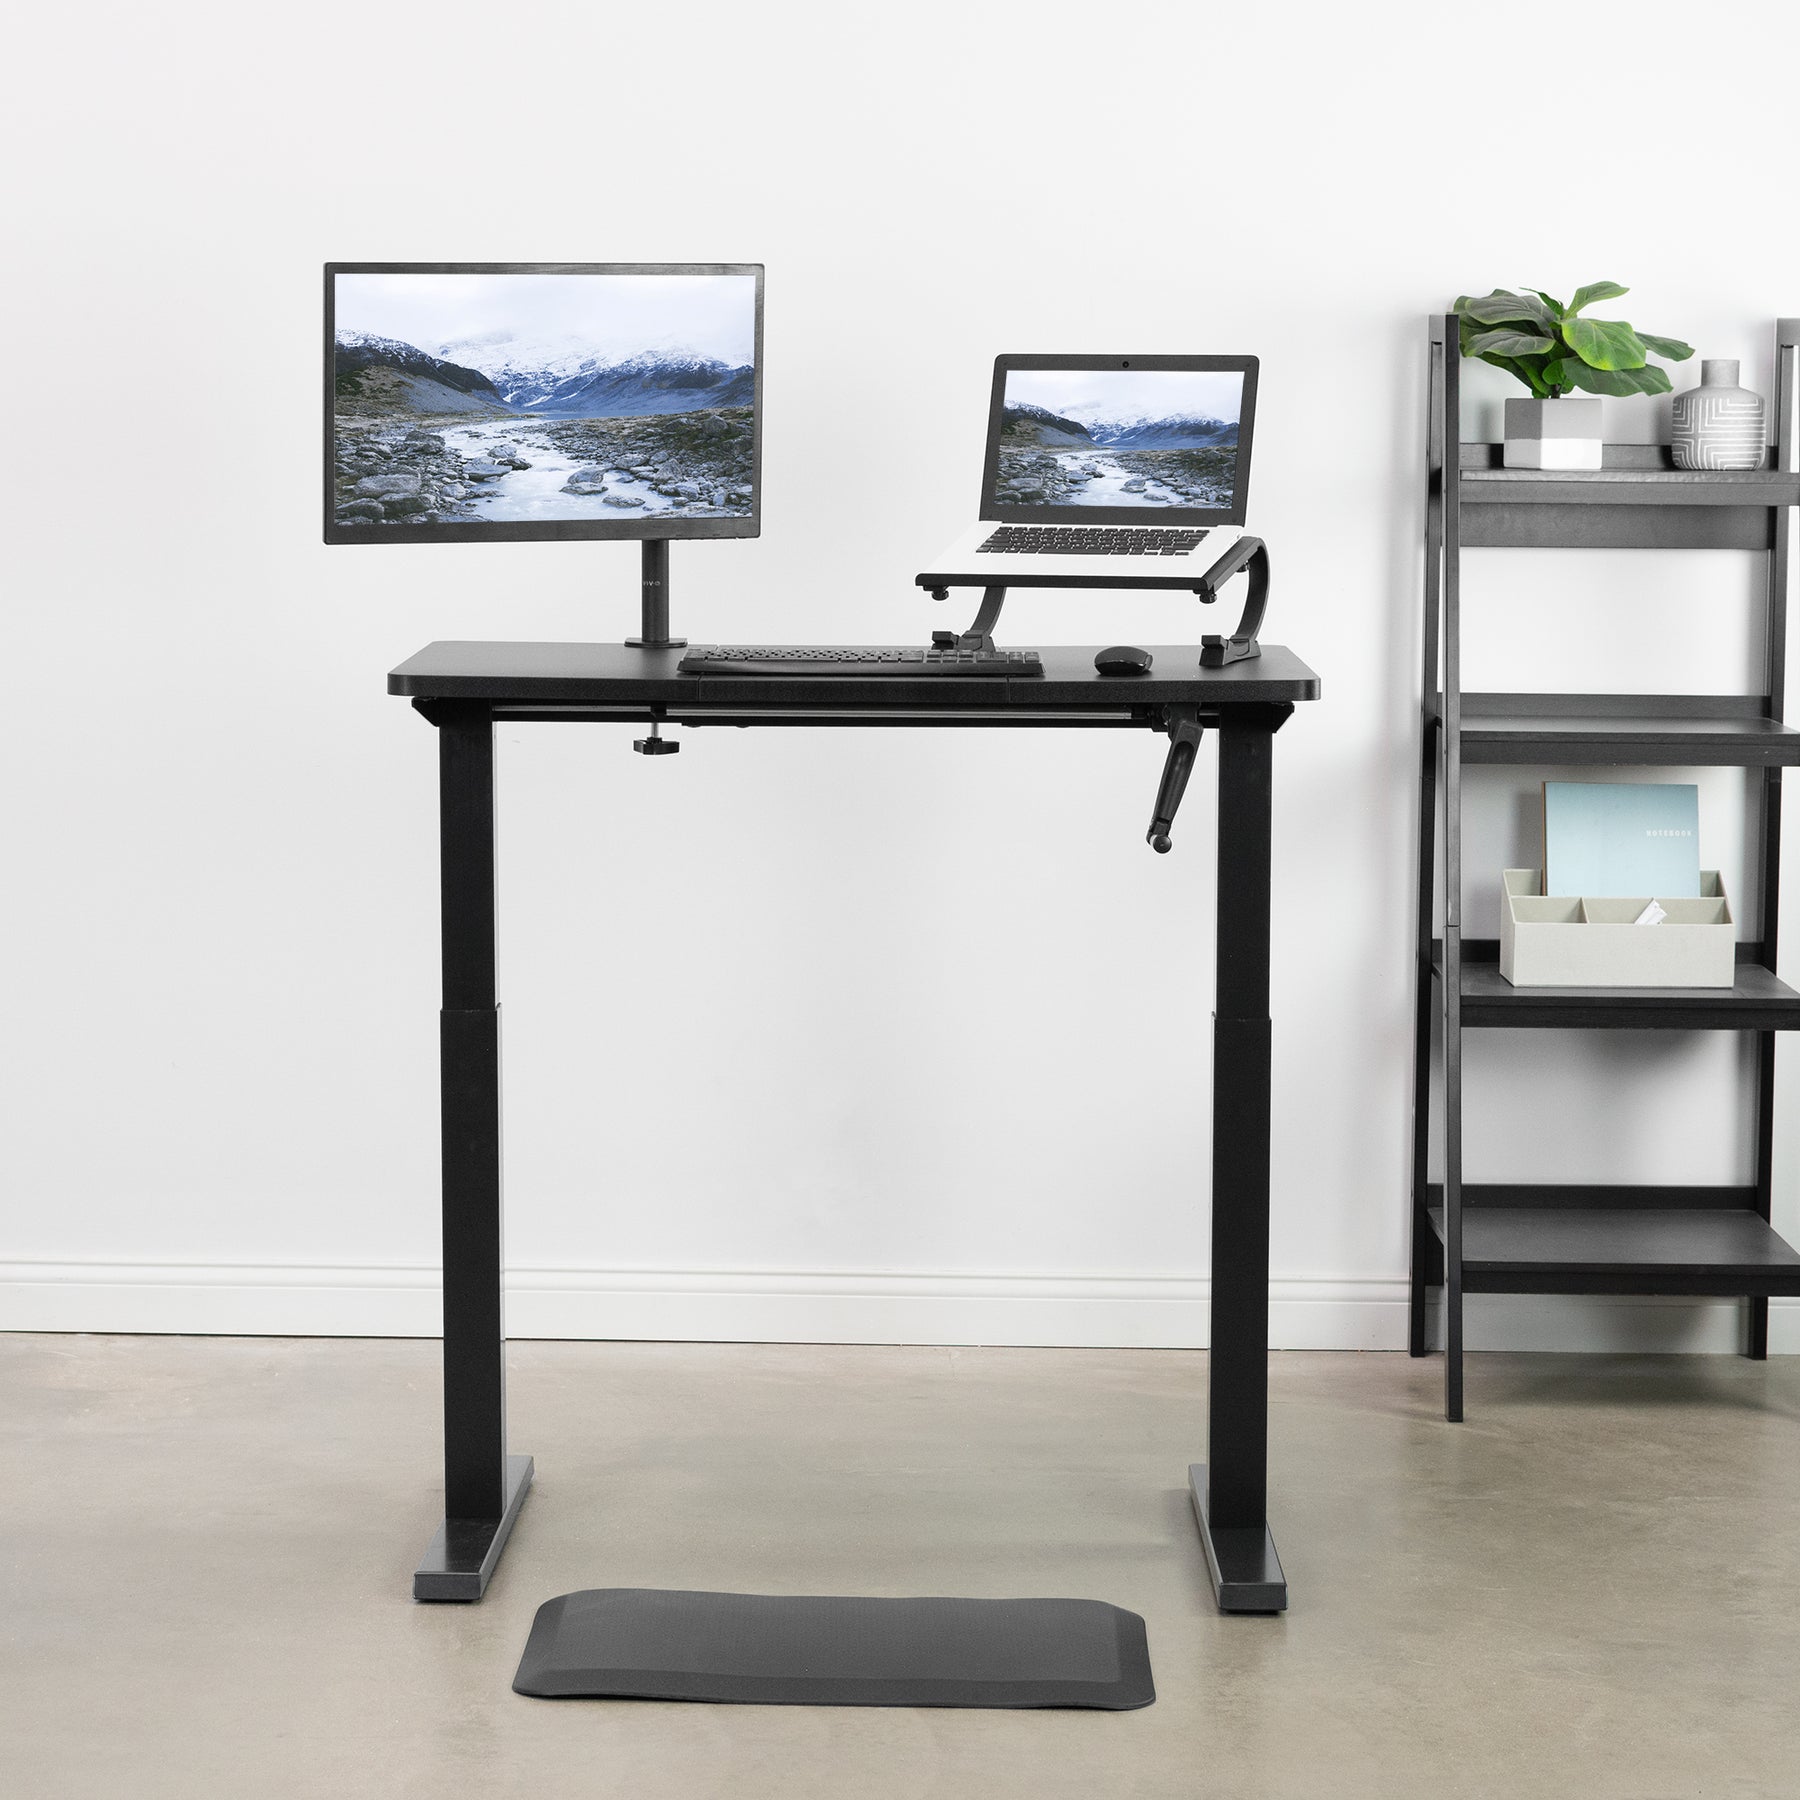 Vivo Memory Foam Standing Desk Floor Mat with Massage Ball – Ergo Standing  Desks